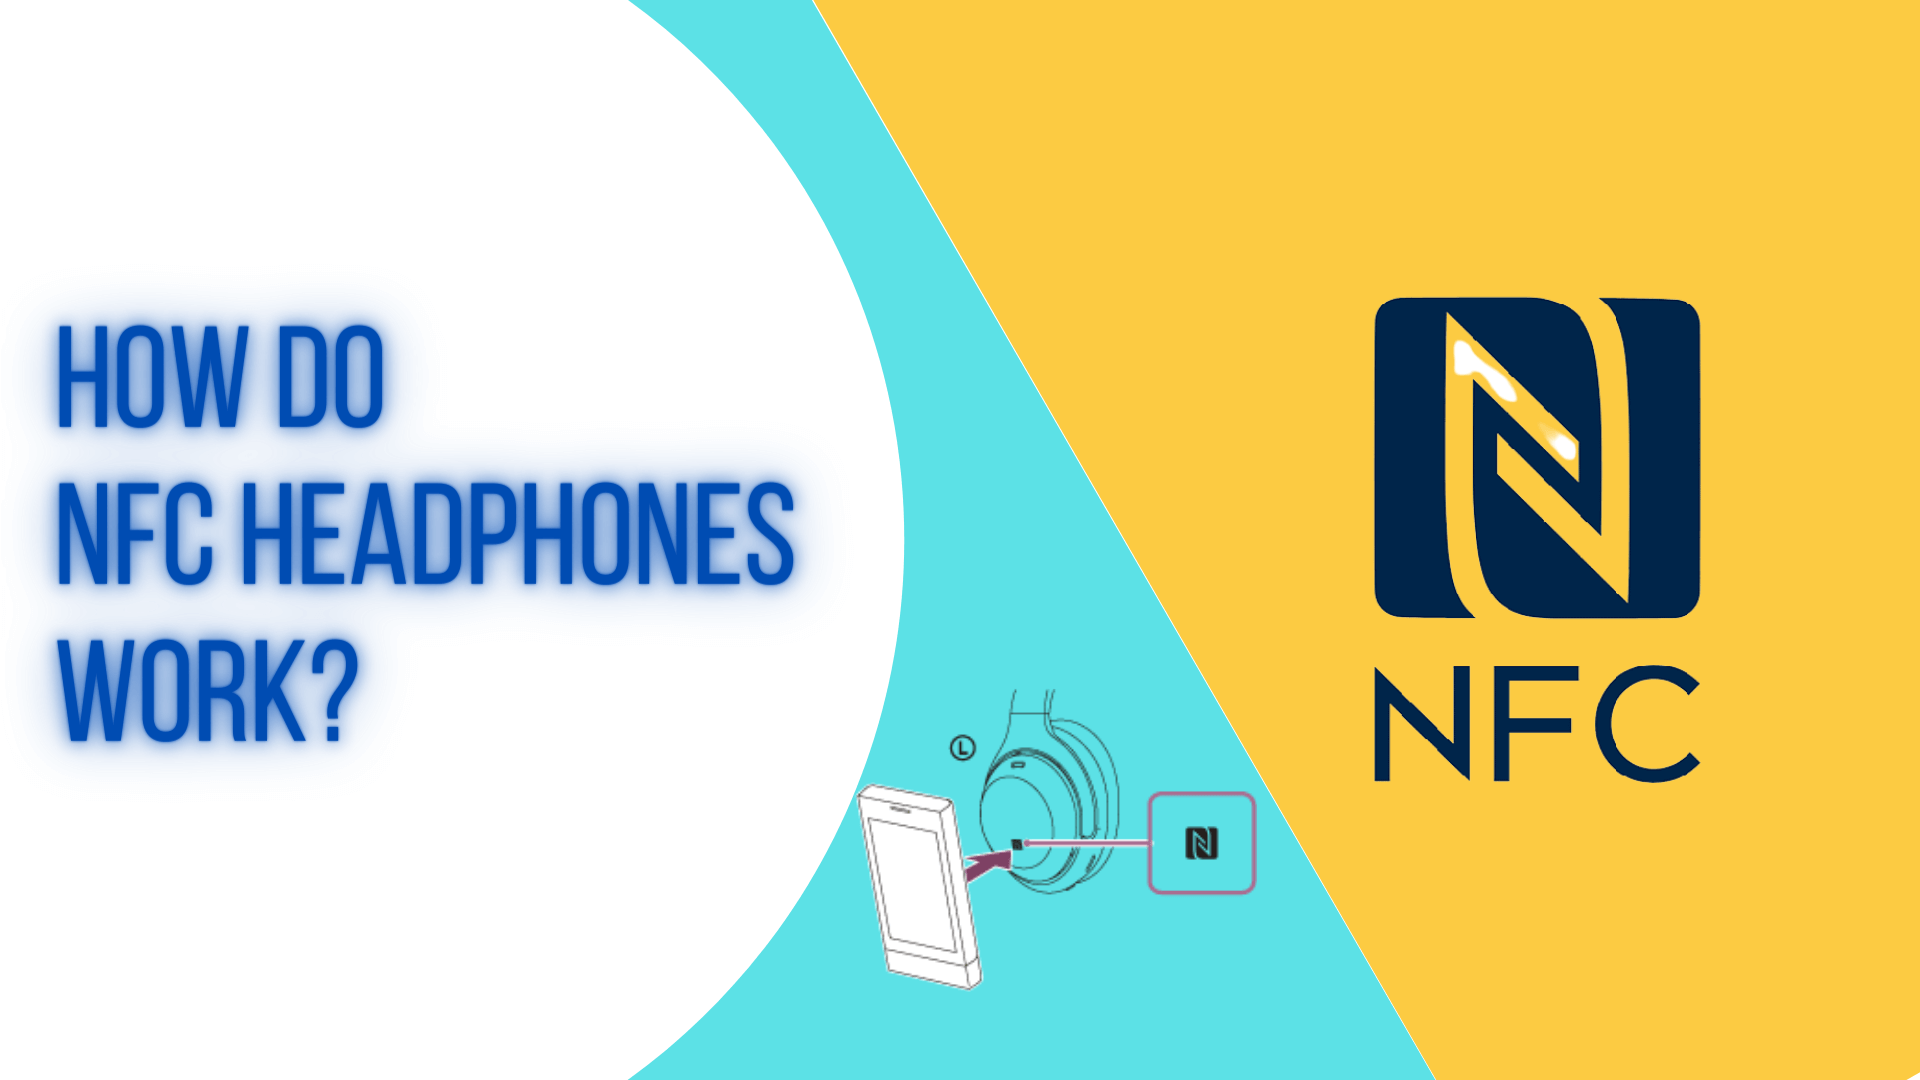 How Do NFC Headphones Work?